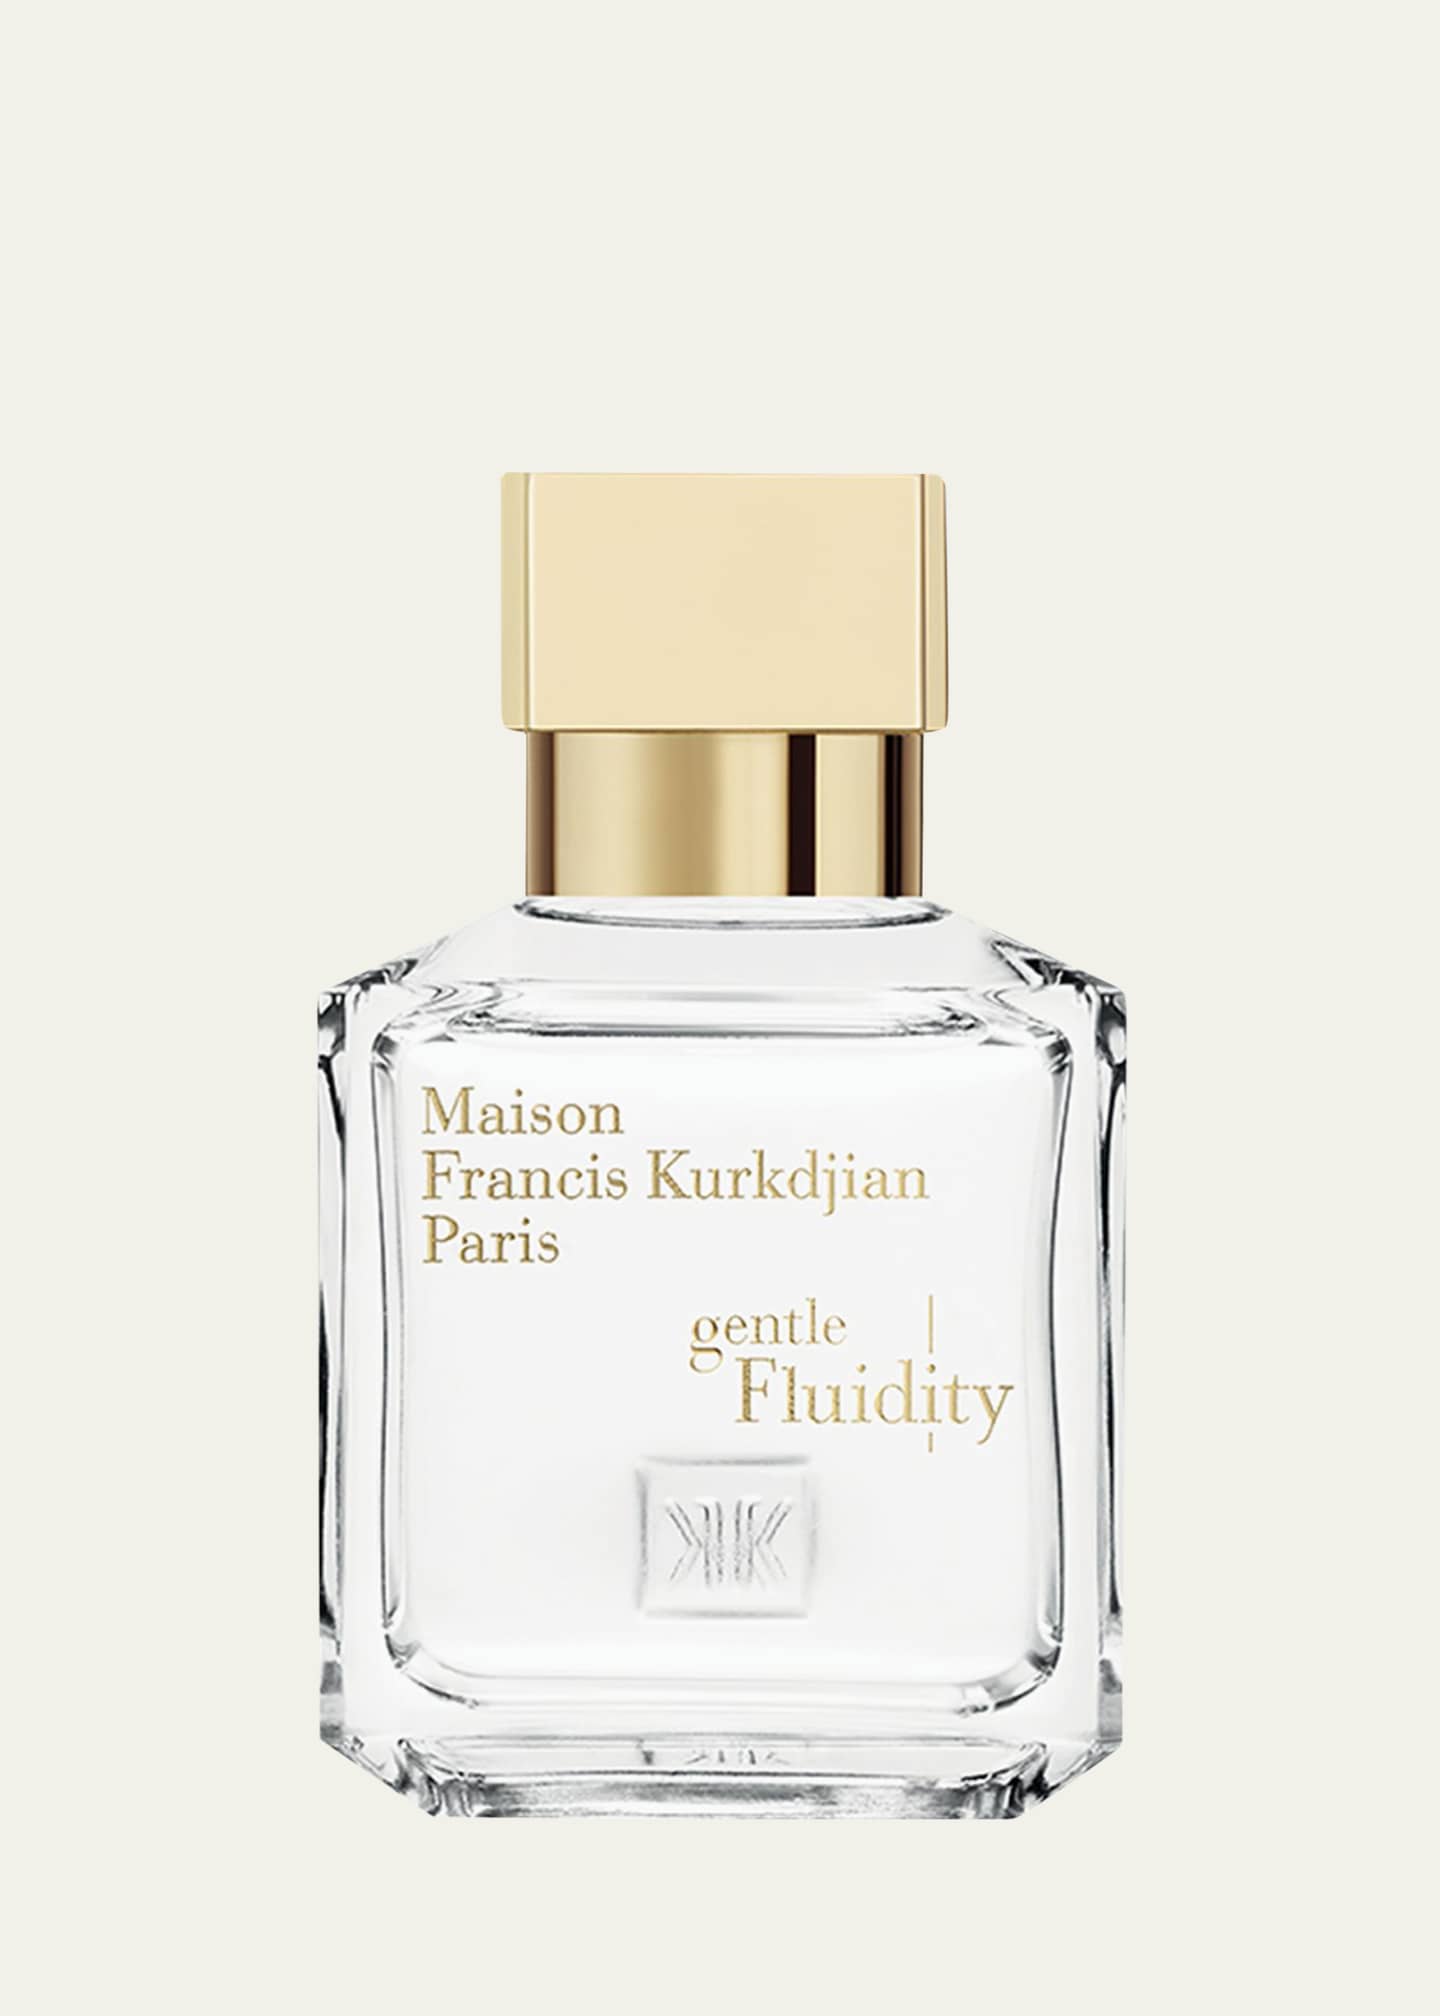 Maison Francis Kurkdjian Gentle Fluidity Gold Eau de Parfum, 2.4 oz. Image 1 of 2